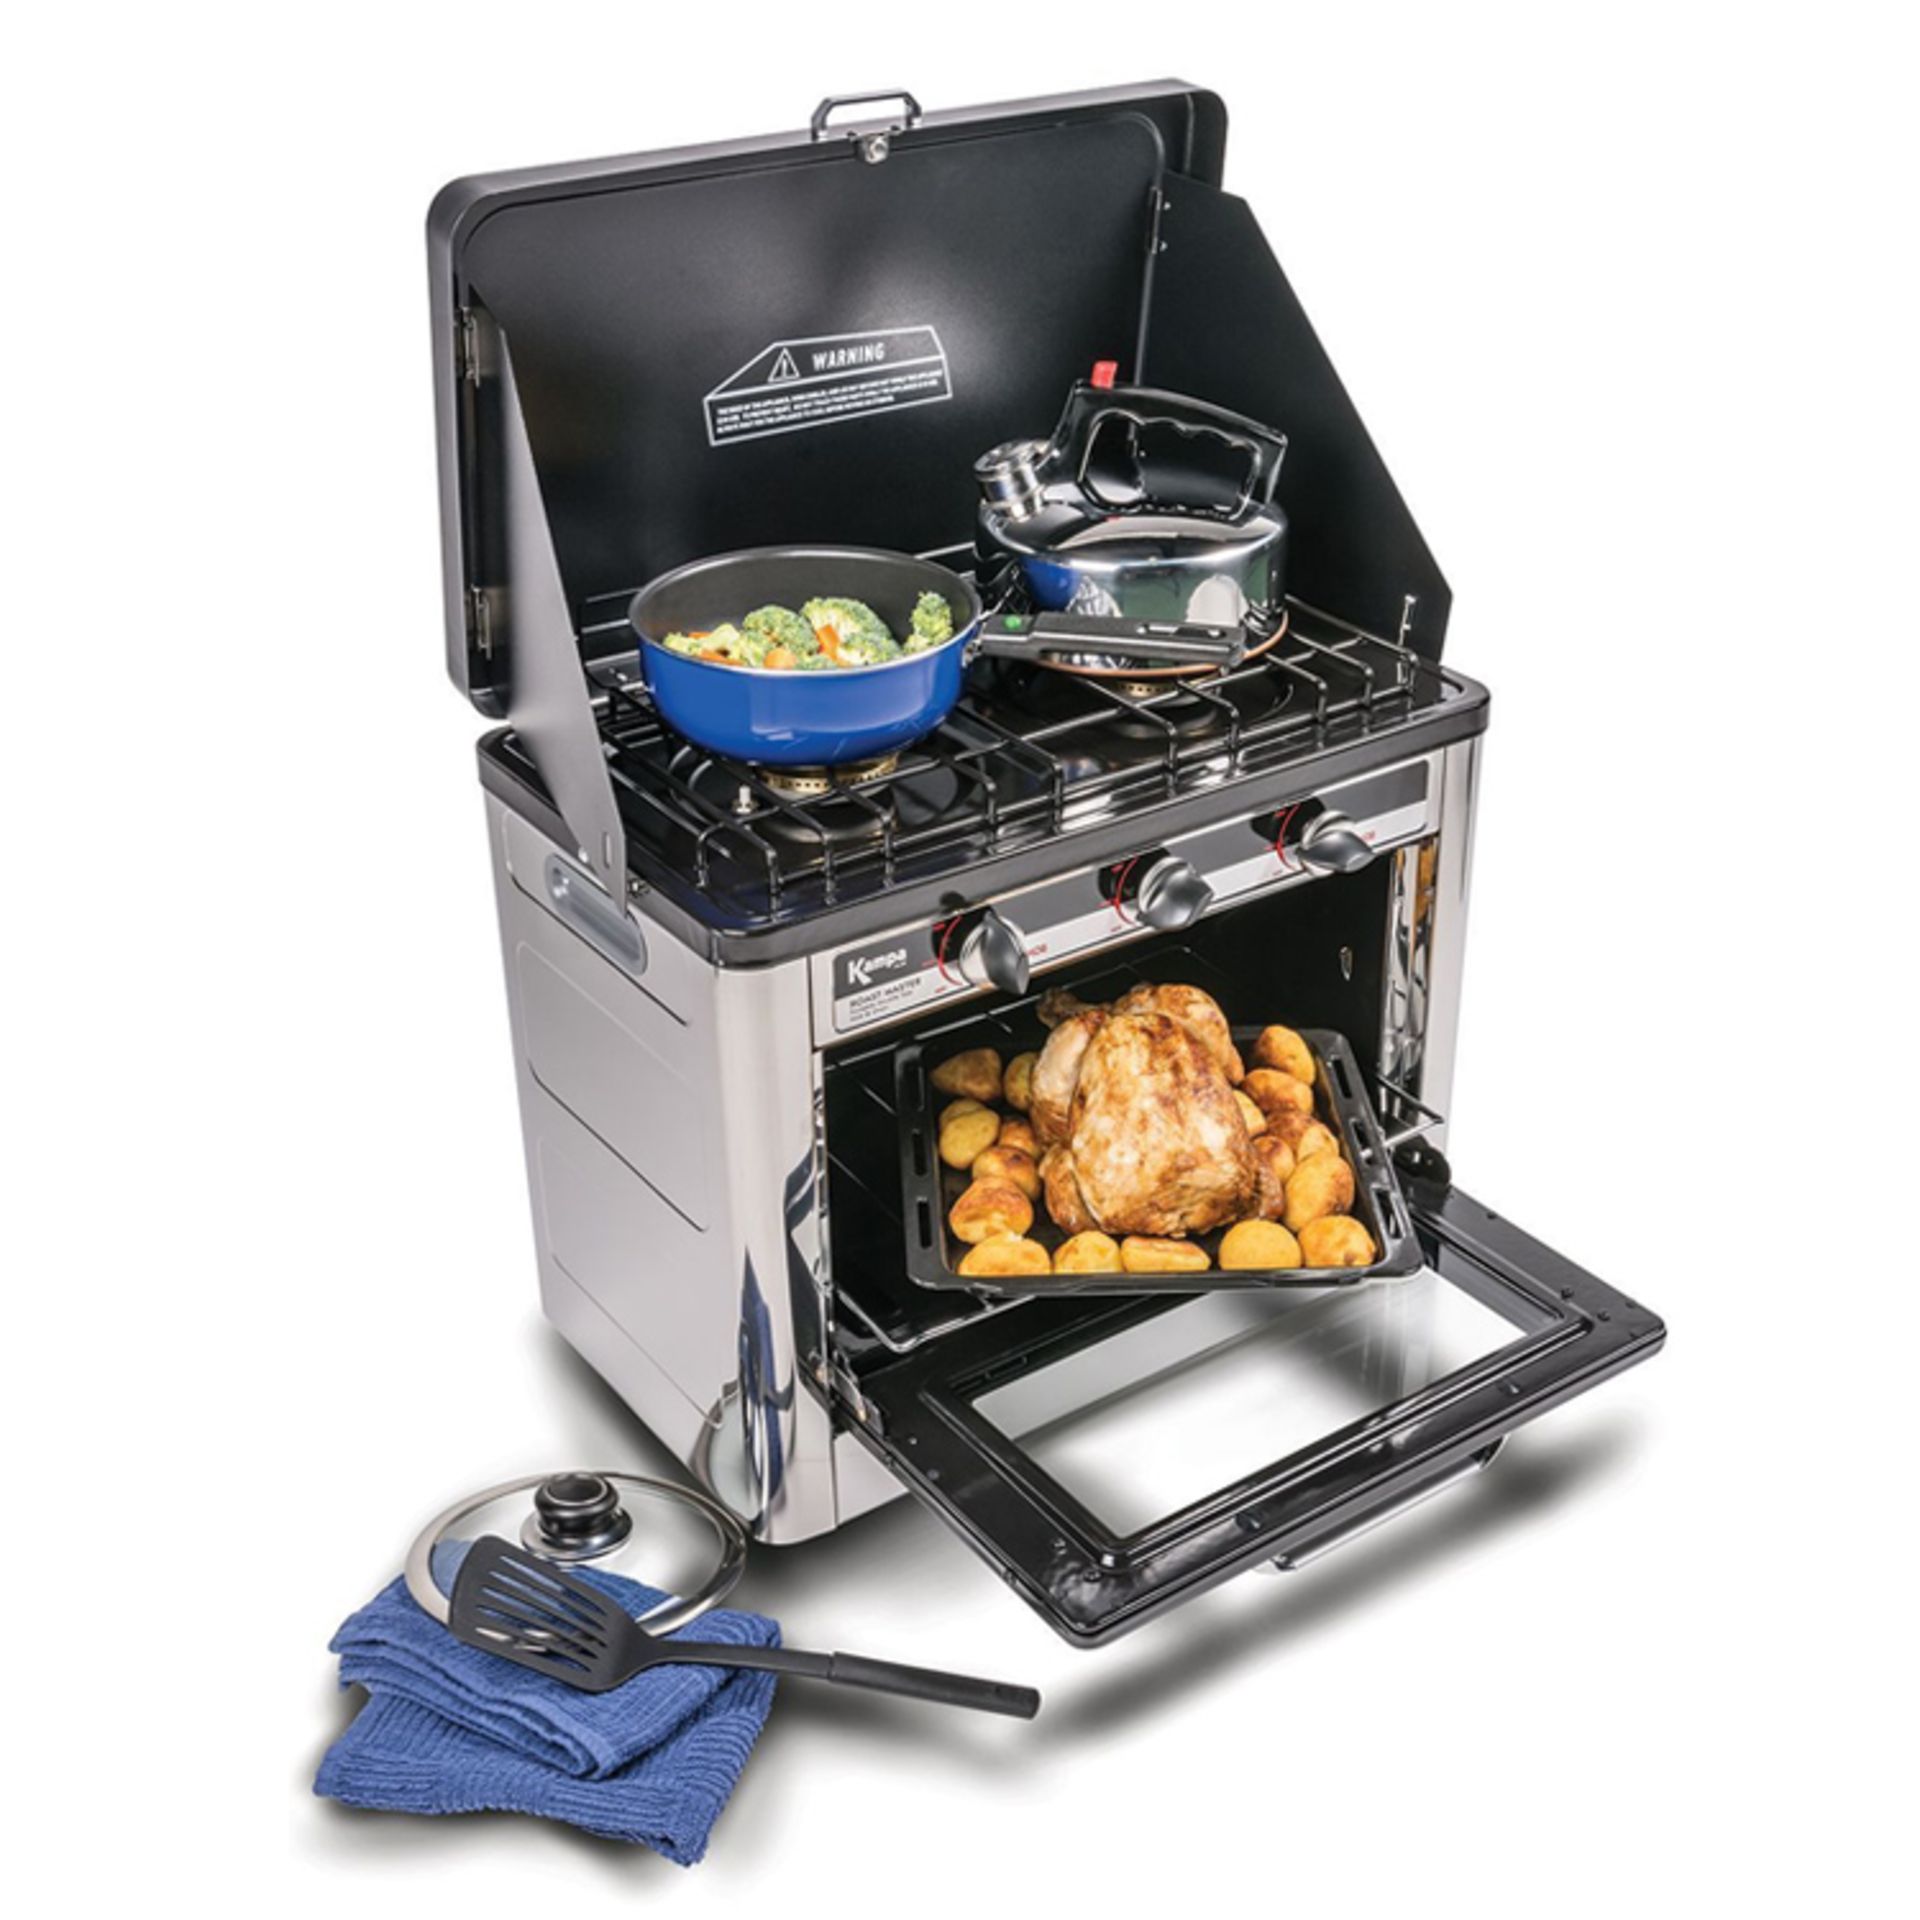 Kampa Roast Master Gas Hob & Oven – Size: (54 x 31